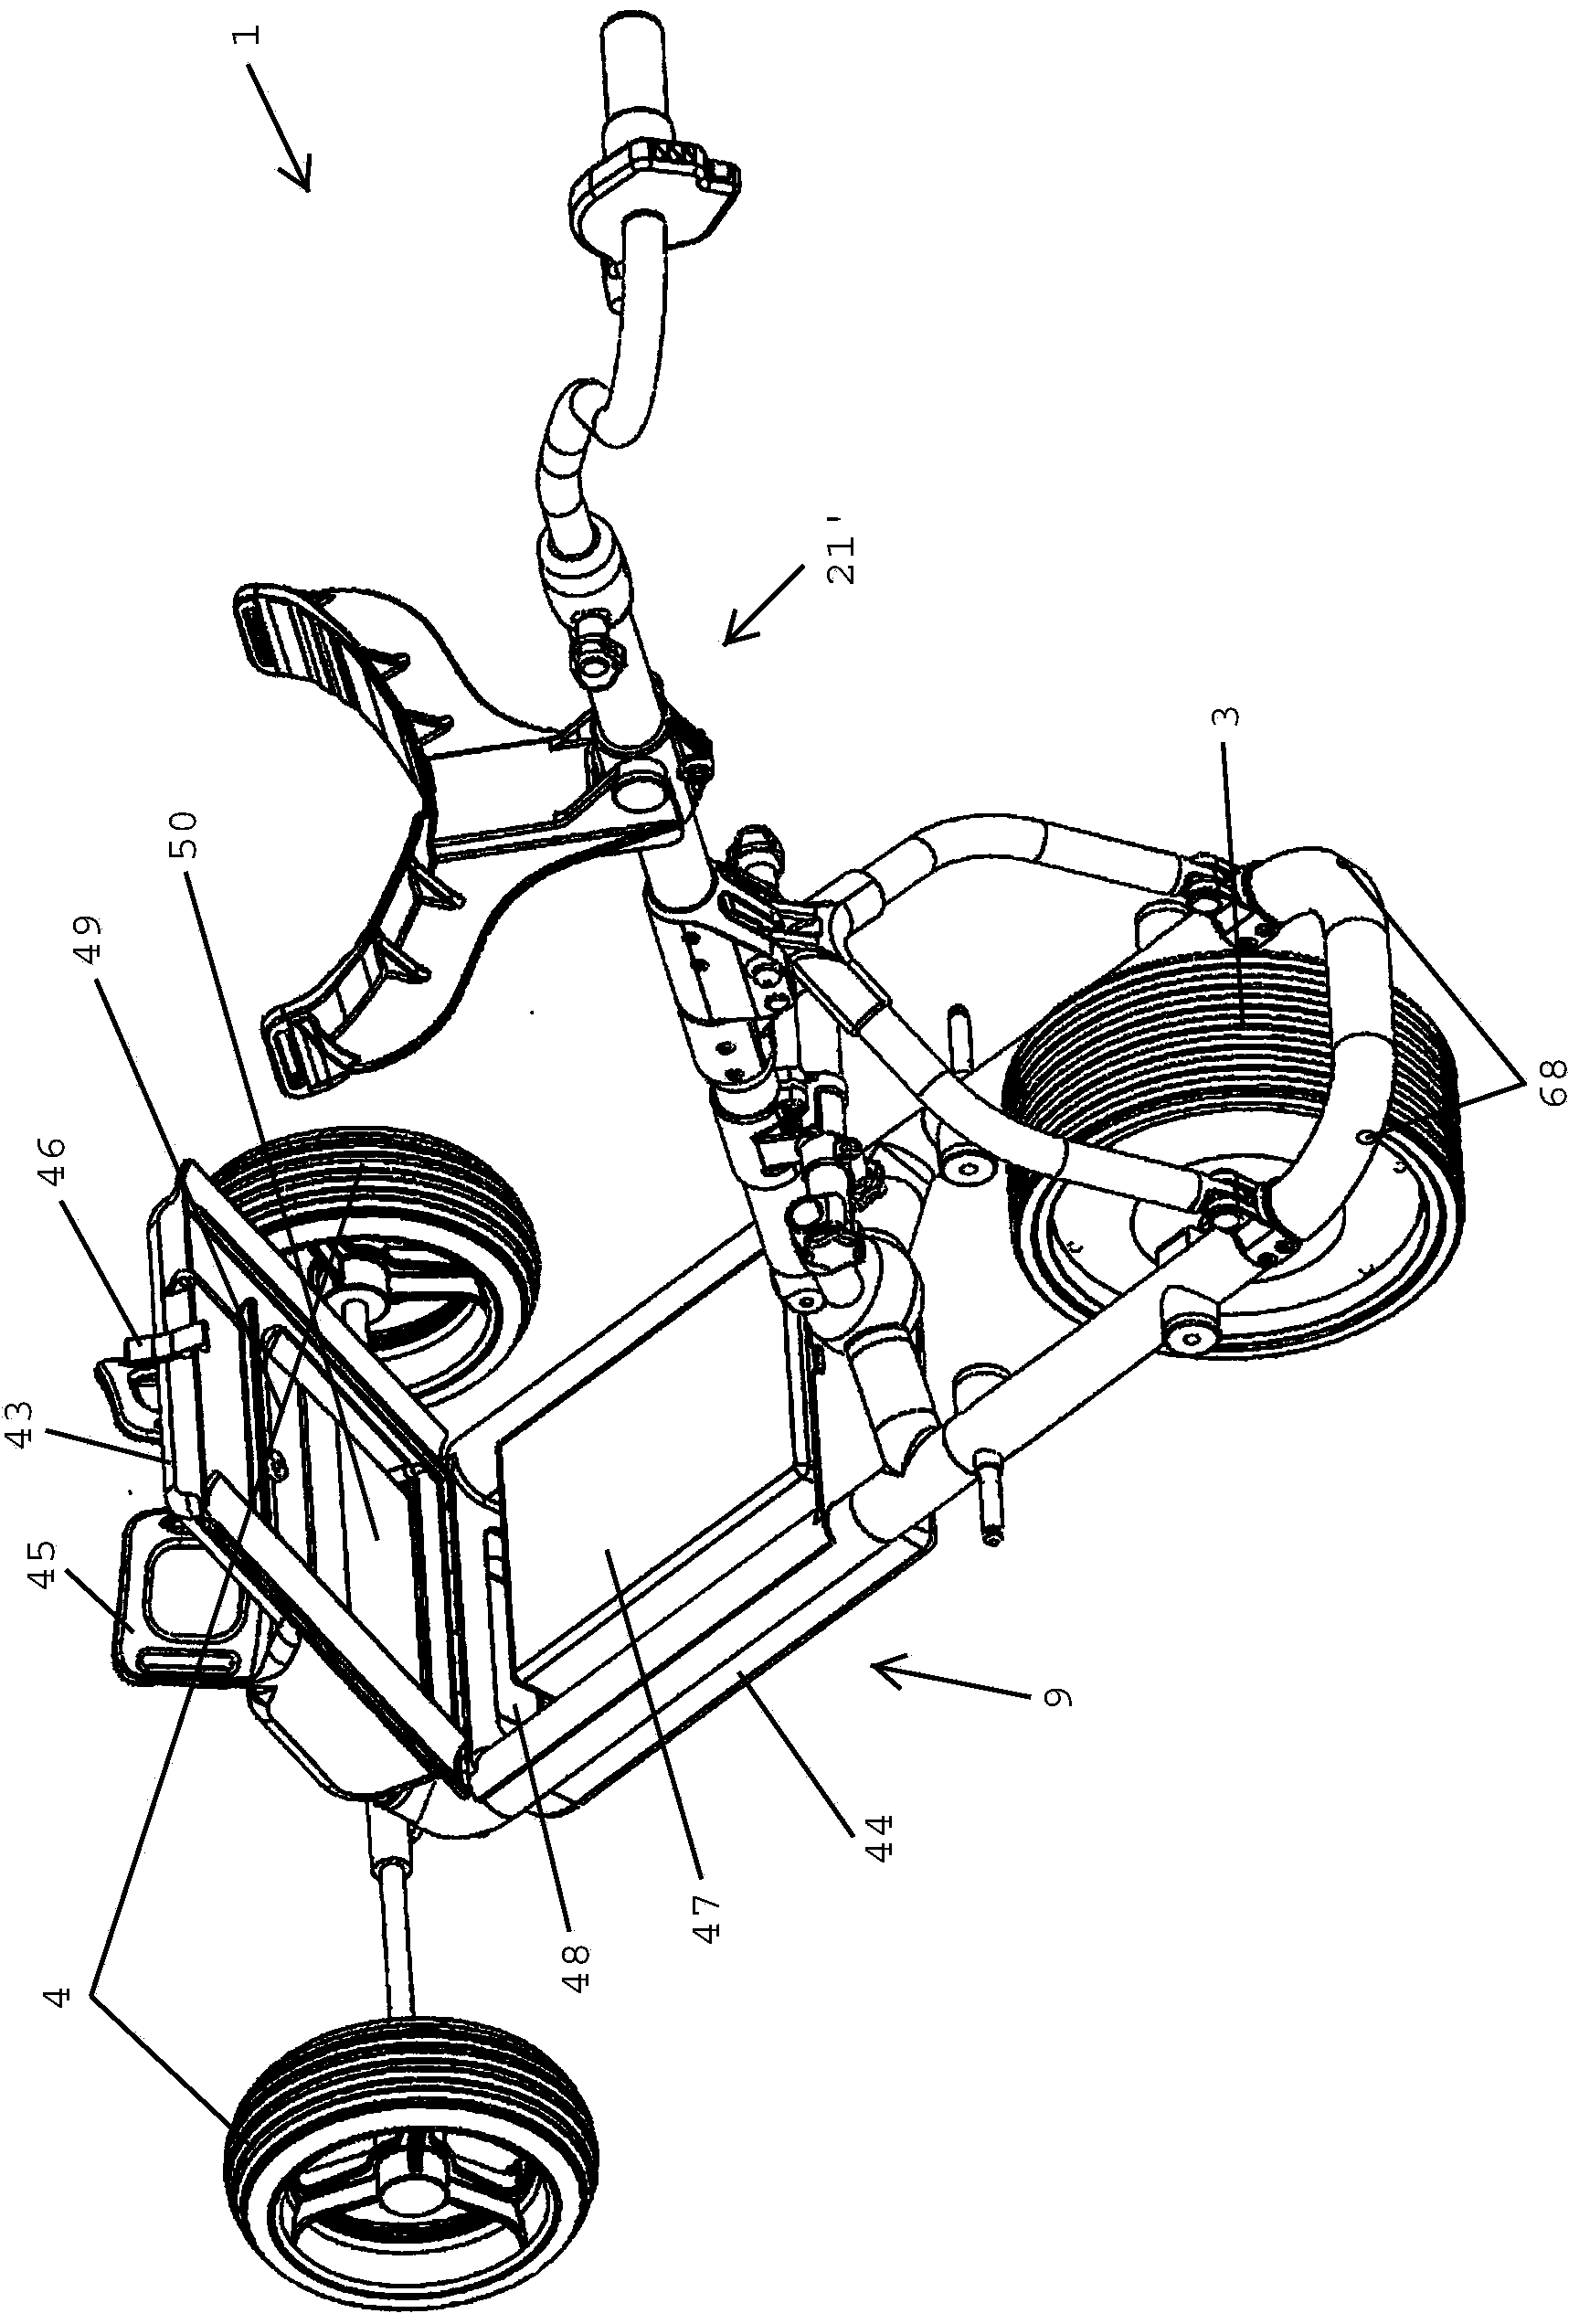 Electric cart